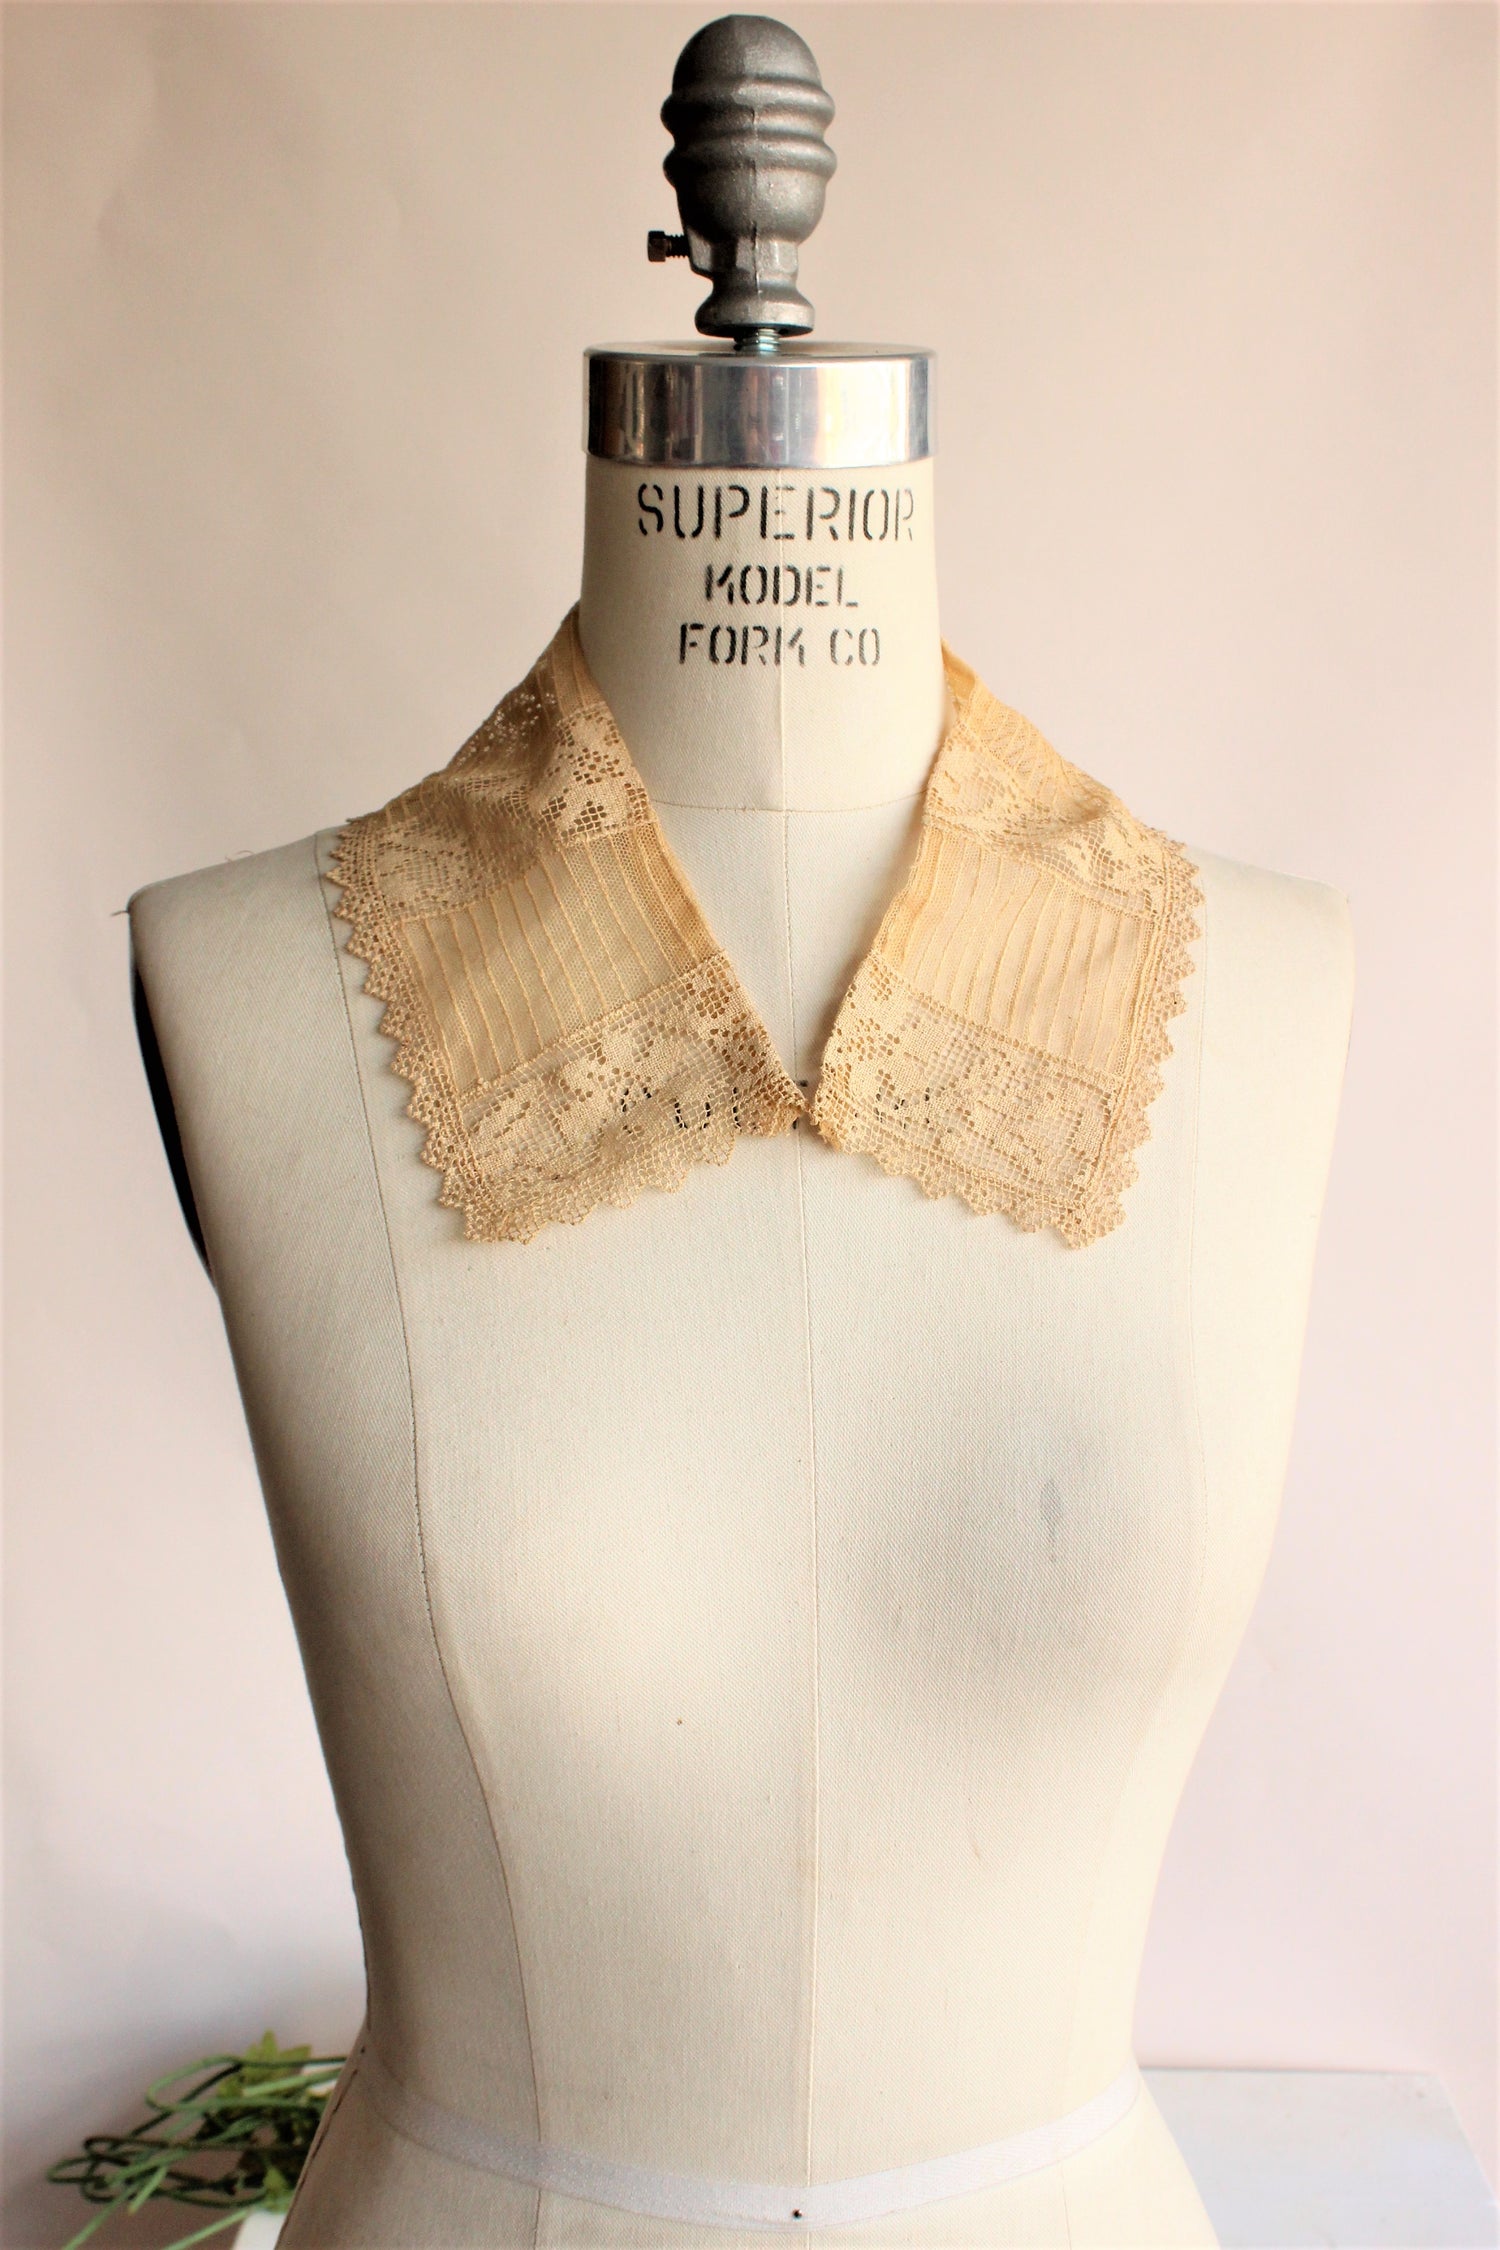 Antique 1920s Lace Collar in Honey Beige